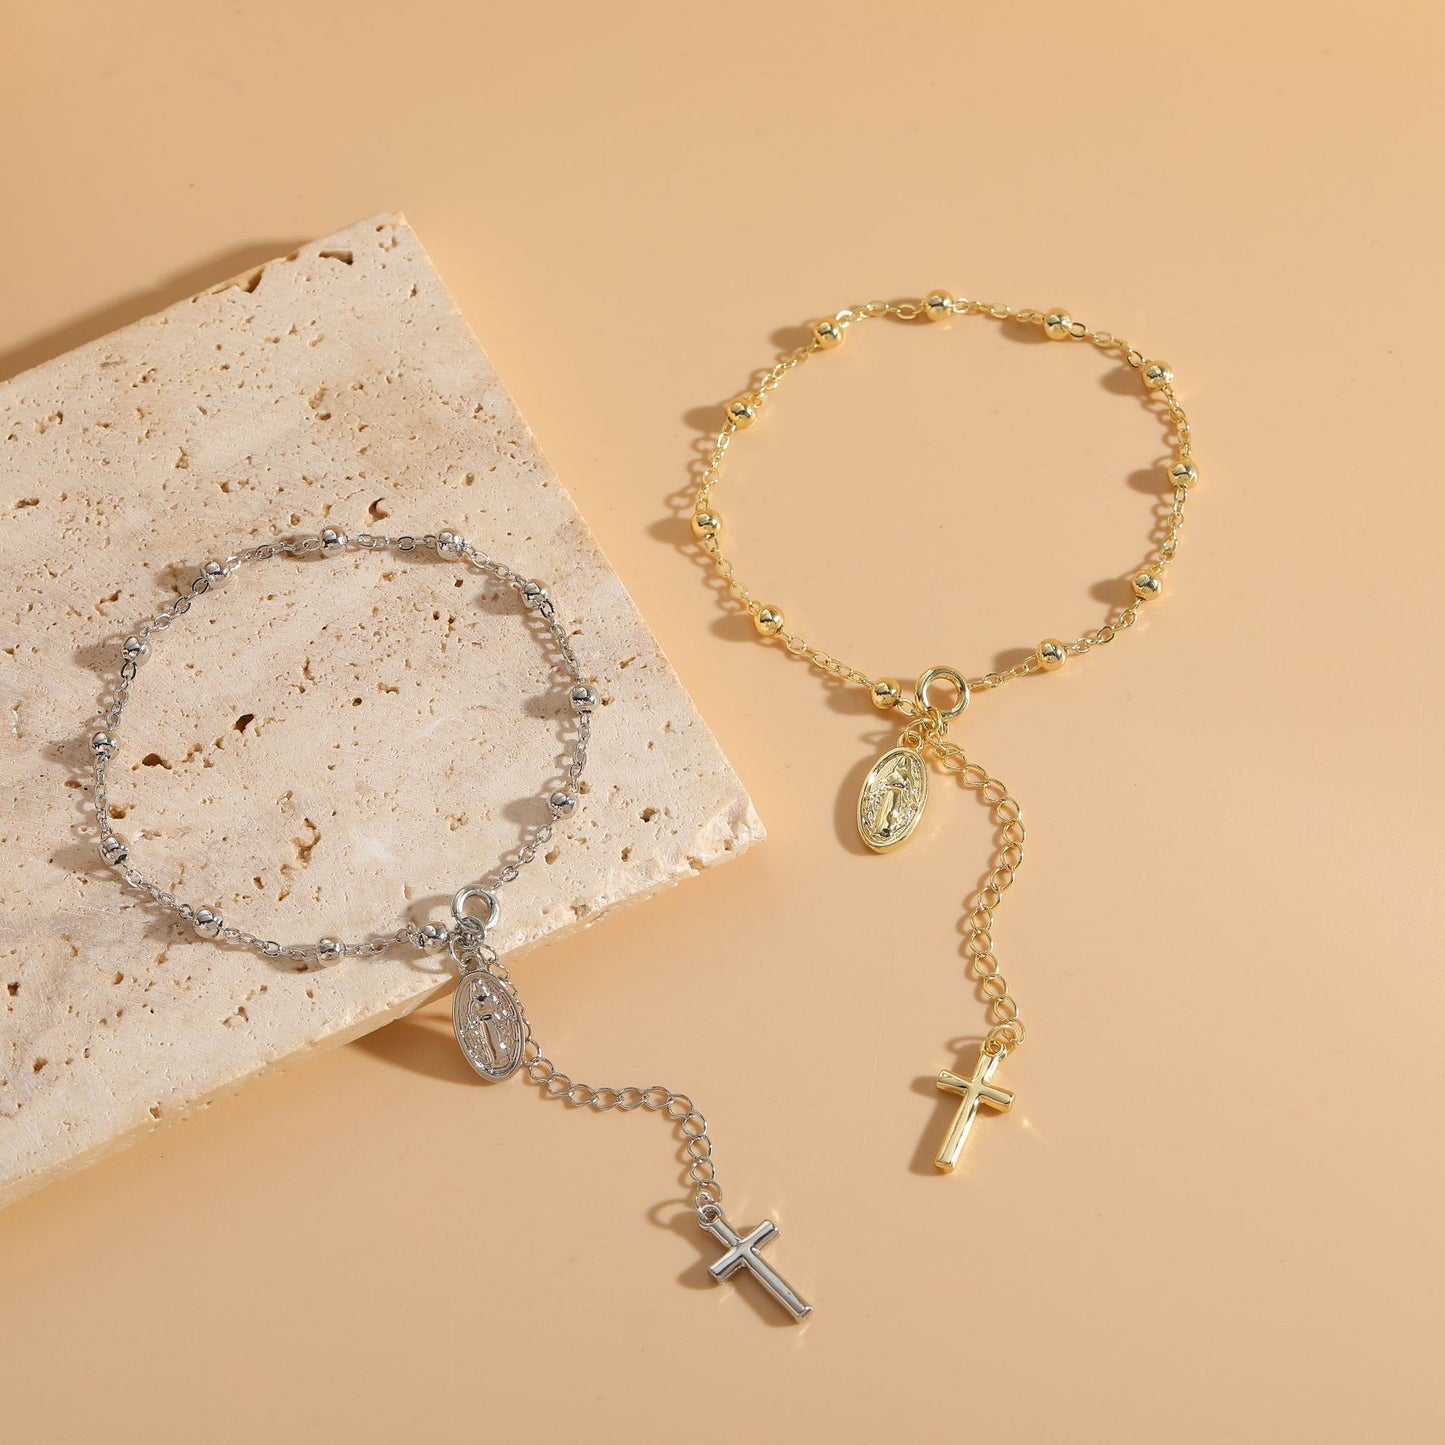 Casual Simple Style Human Cross Copper 14k Gold Plated Bracelets In Bulk